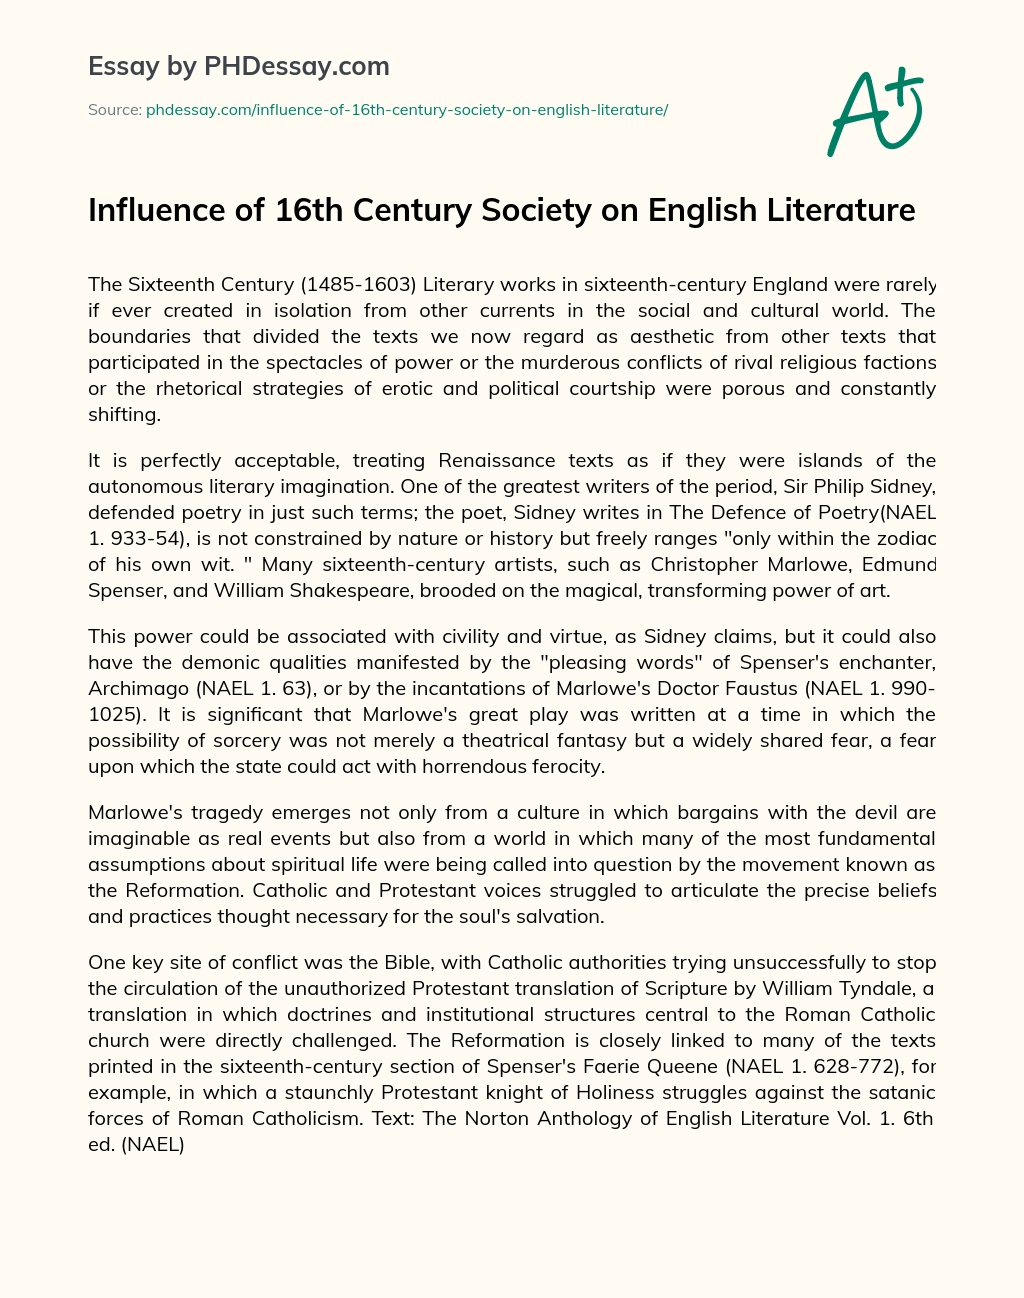 Influence of 16th Century Society on English Literature essay